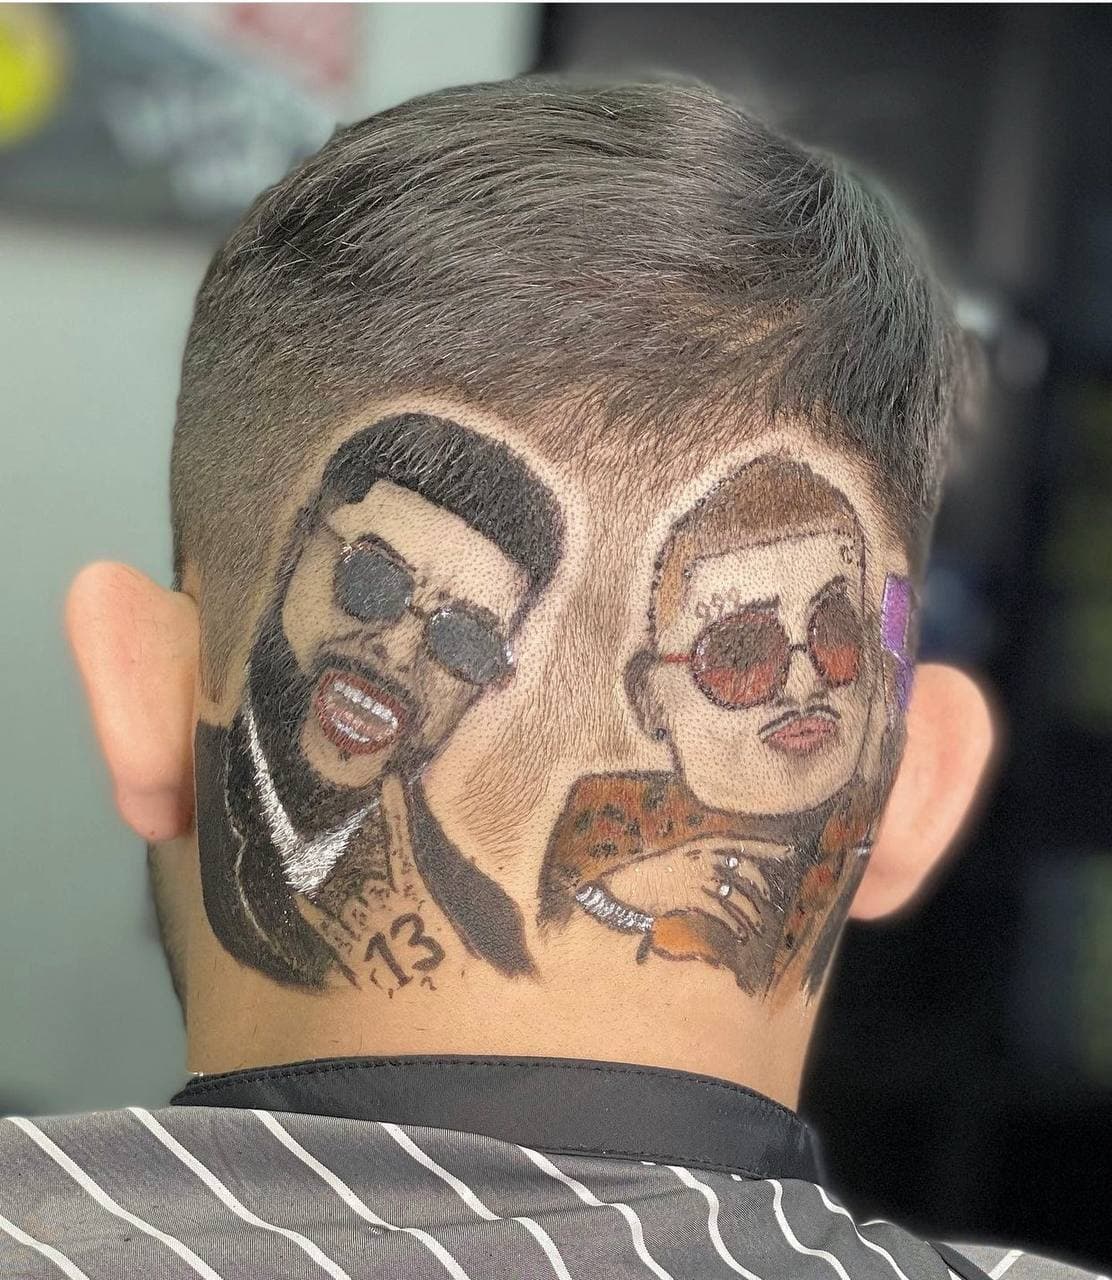 Foto: Instagram / @barbershuhrat